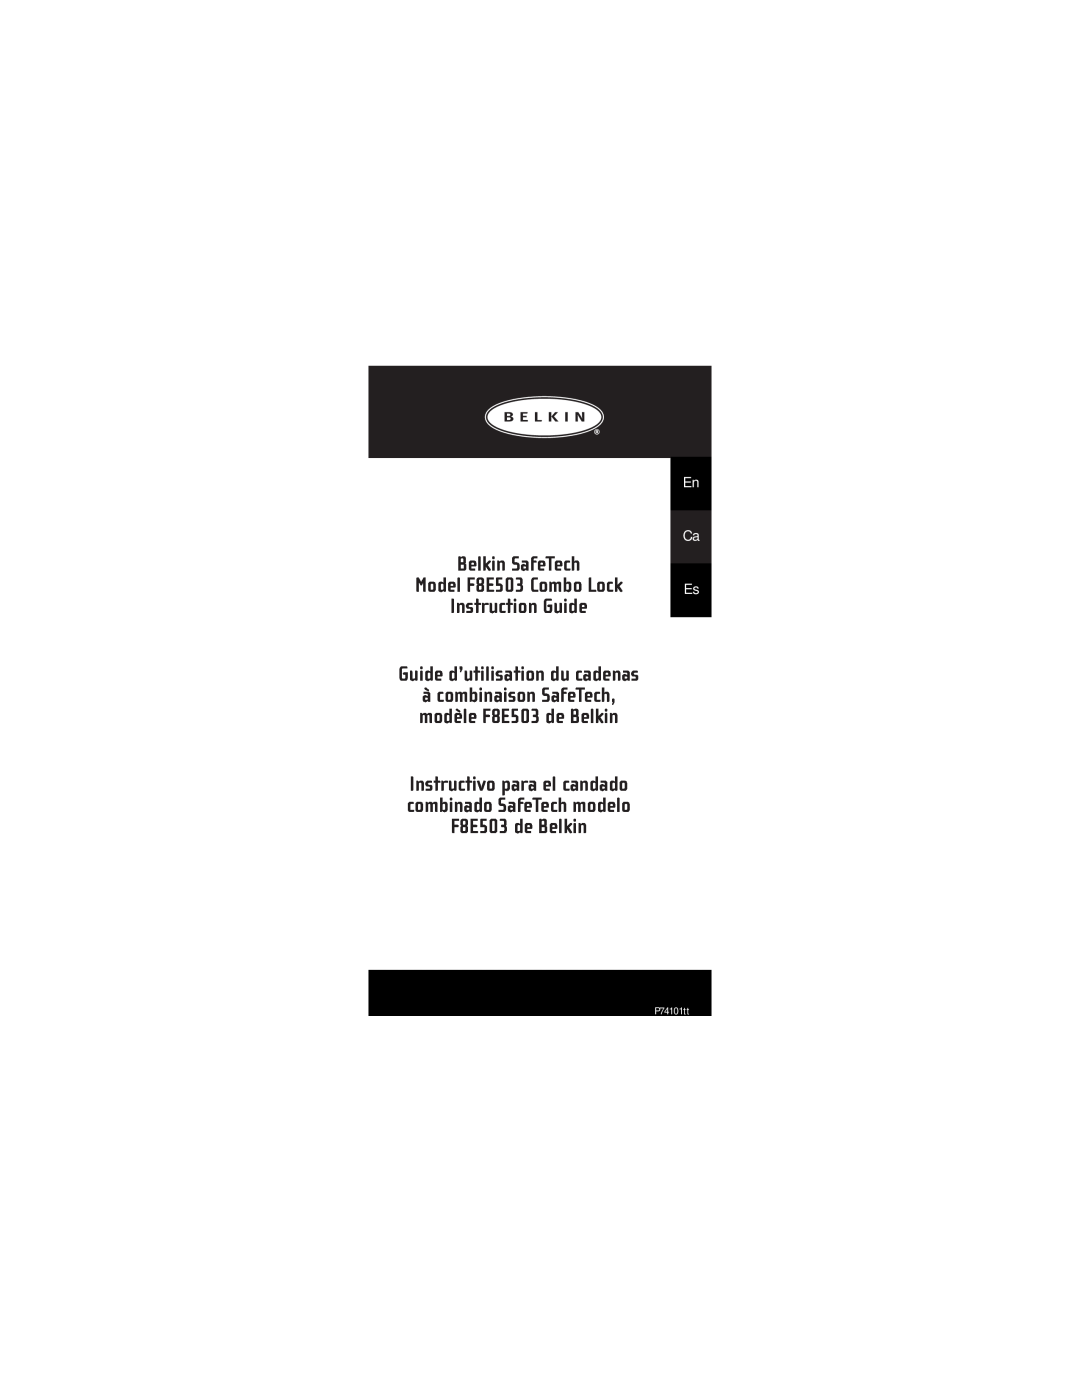 Belkin manual Belkin SafeTech, Instruction Guide, Model F8E503 Combo Lock, Guide d’utilisation du cadenas, En Ca Es 